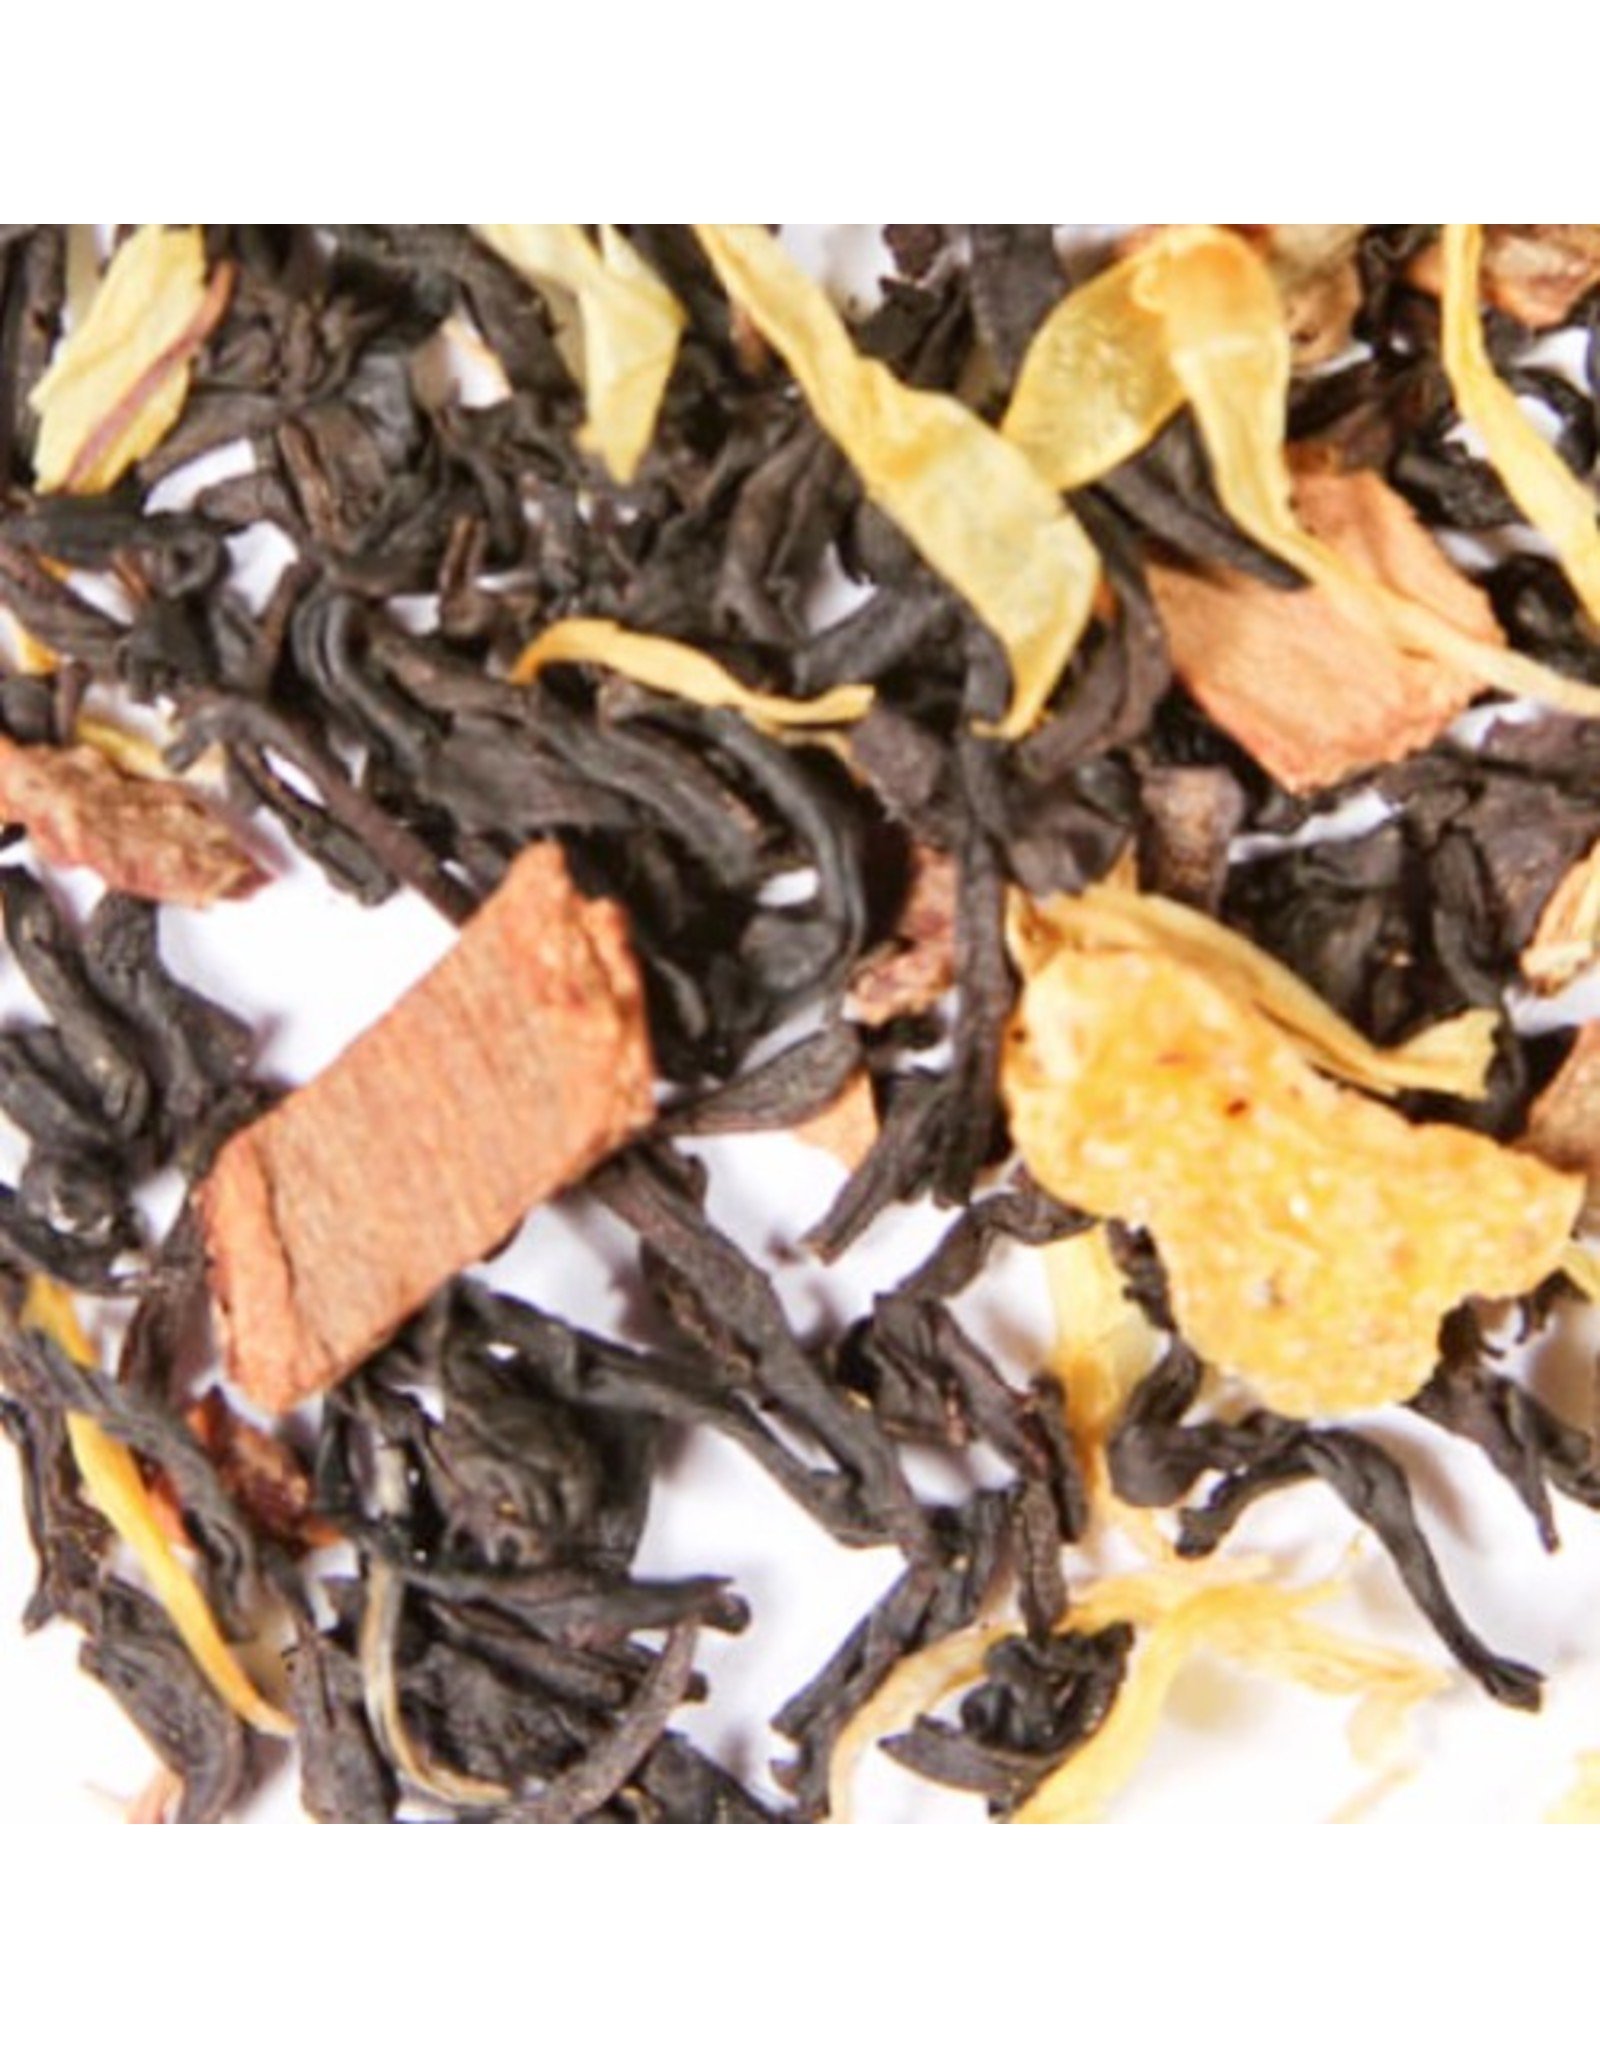 Tea from Sri Lanka Decaf Holiday Nightcap (Hazelnut Creme)